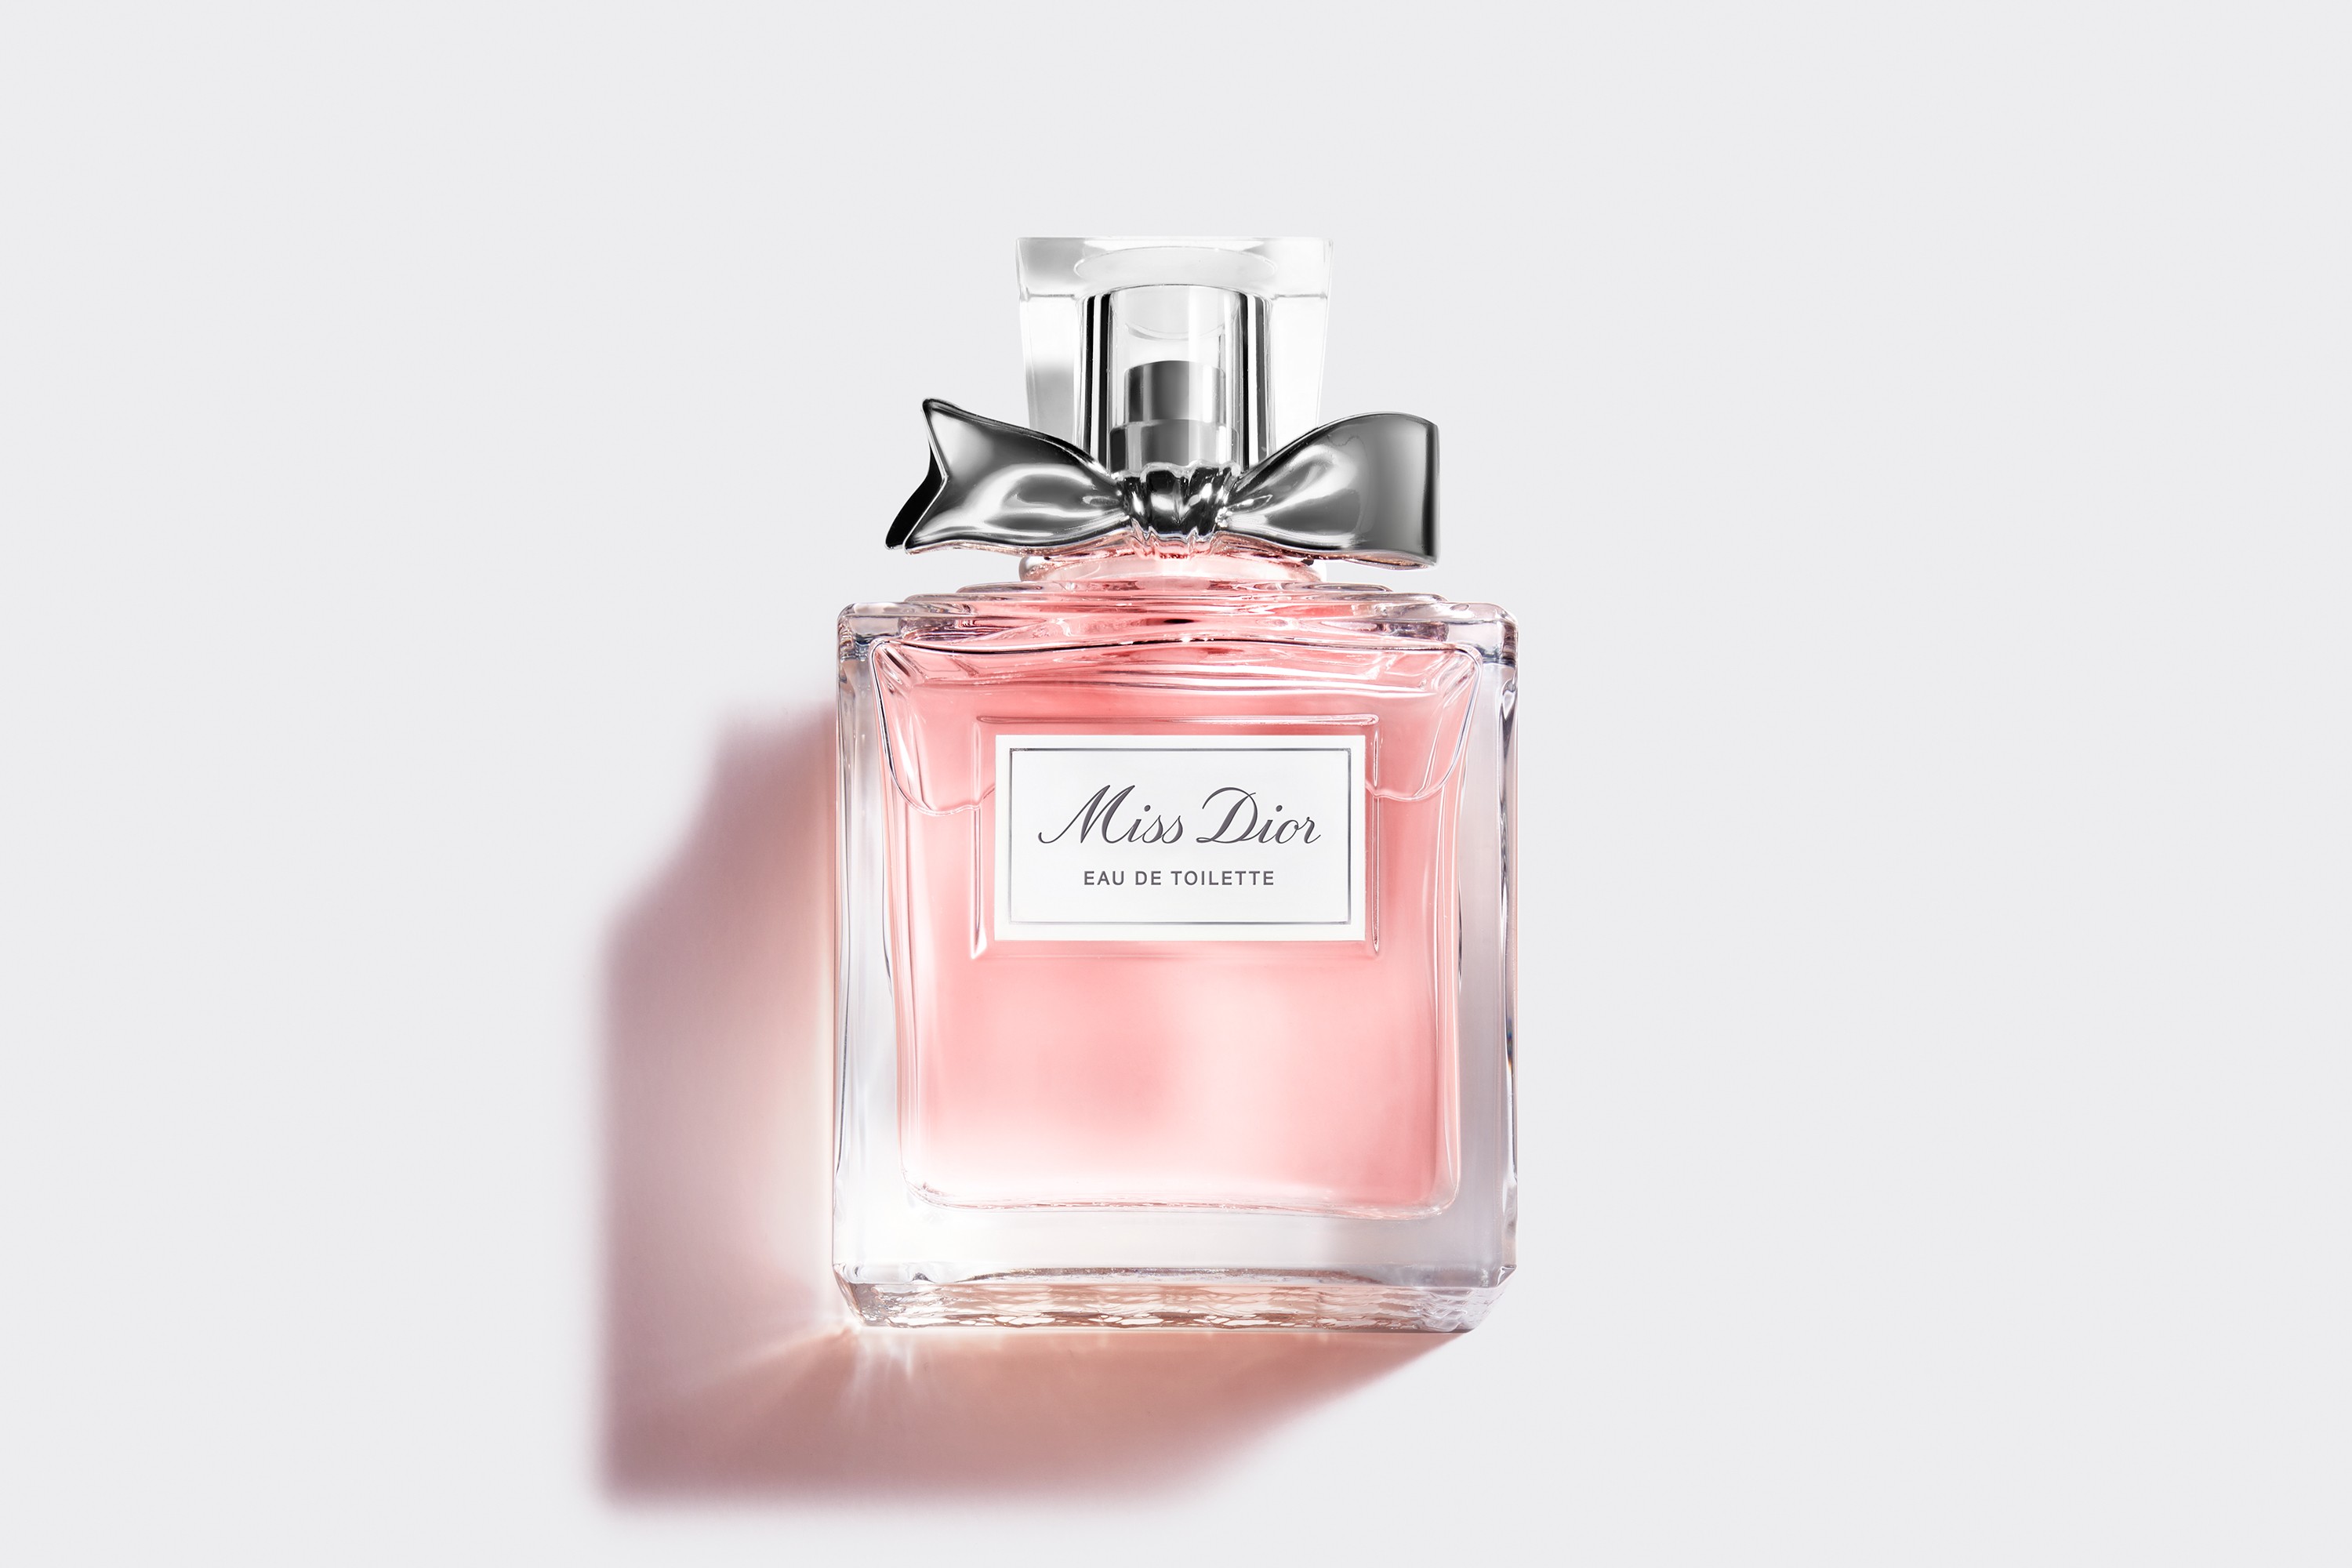 Parfum Miss Dior - Homecare24